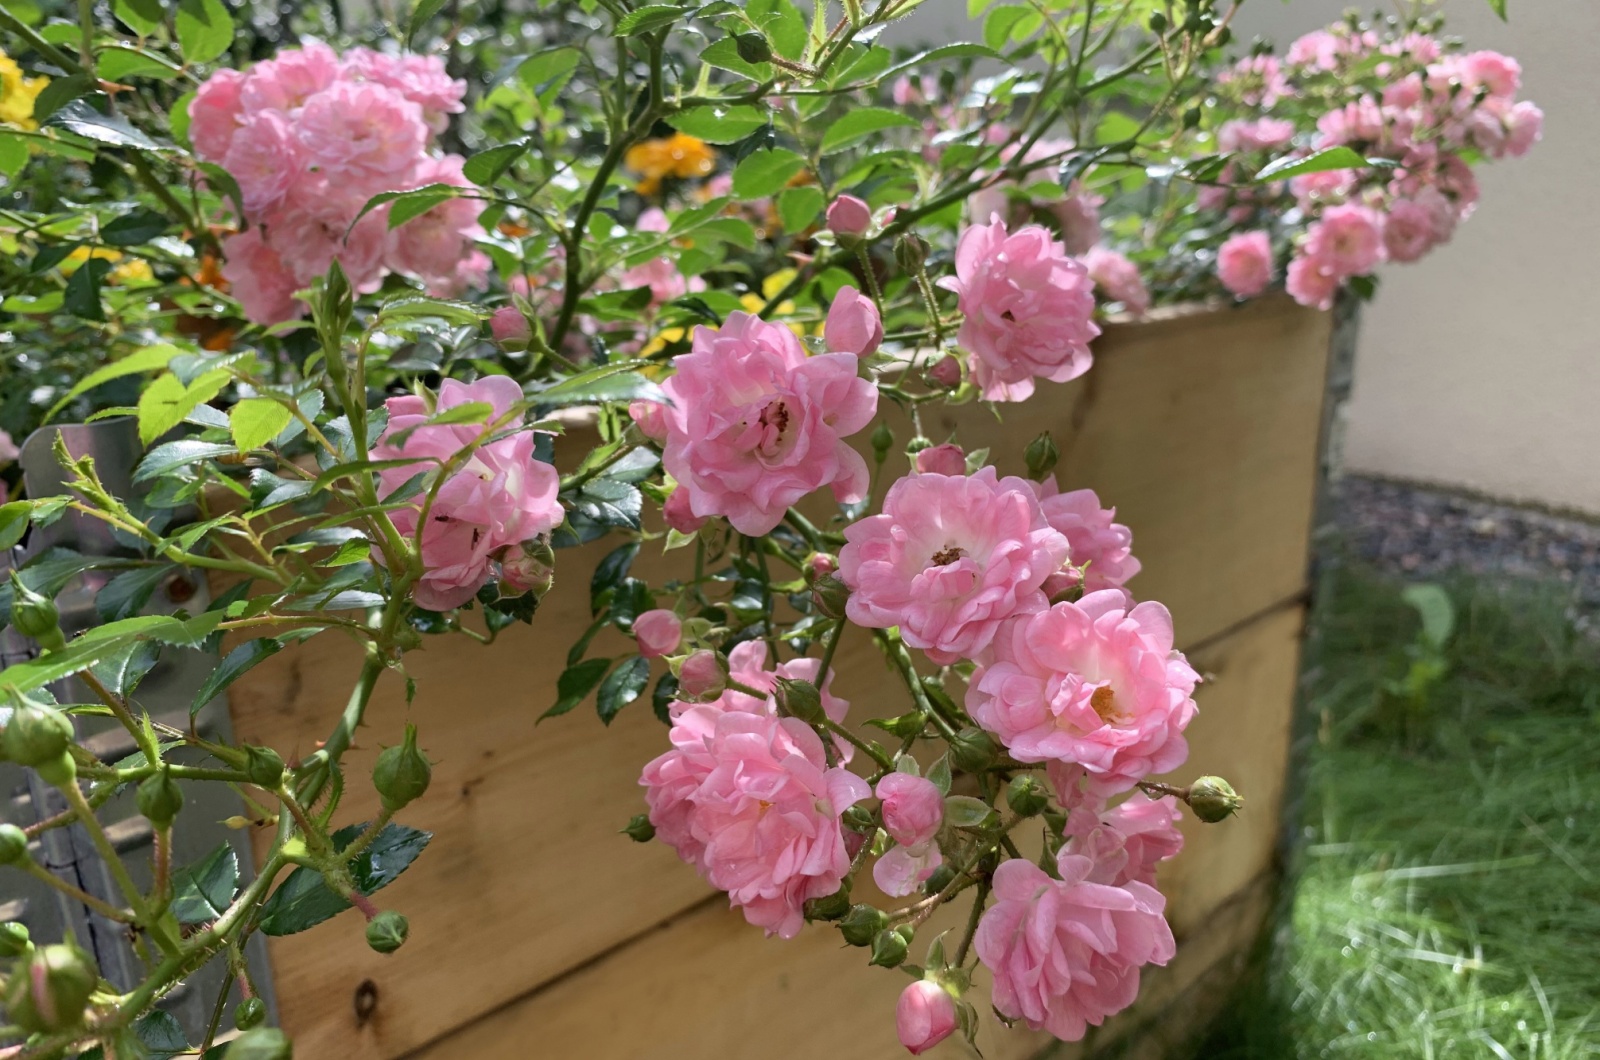 pink roses growing in garden bed